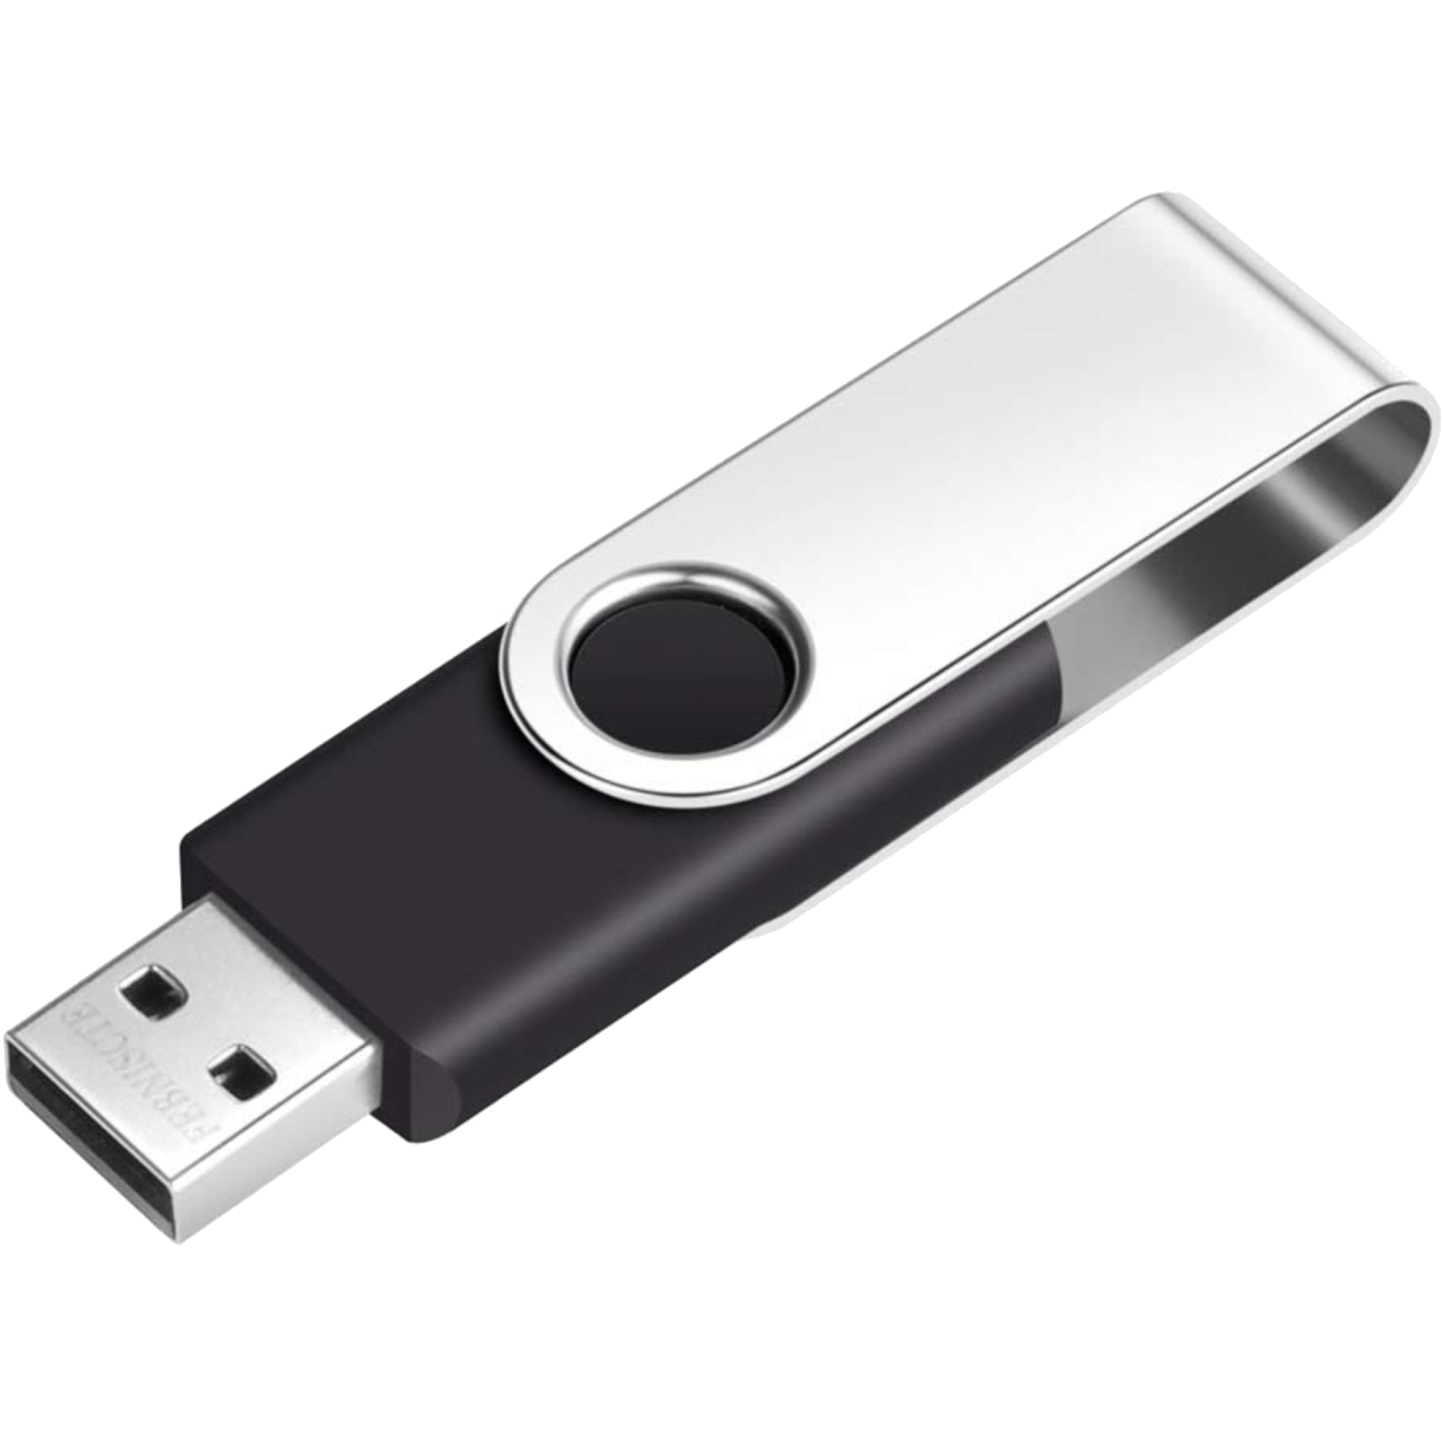 Productfoto van MAHLE X35 Pendrive Software GCU 16GB USB Stick - GCU10200001000